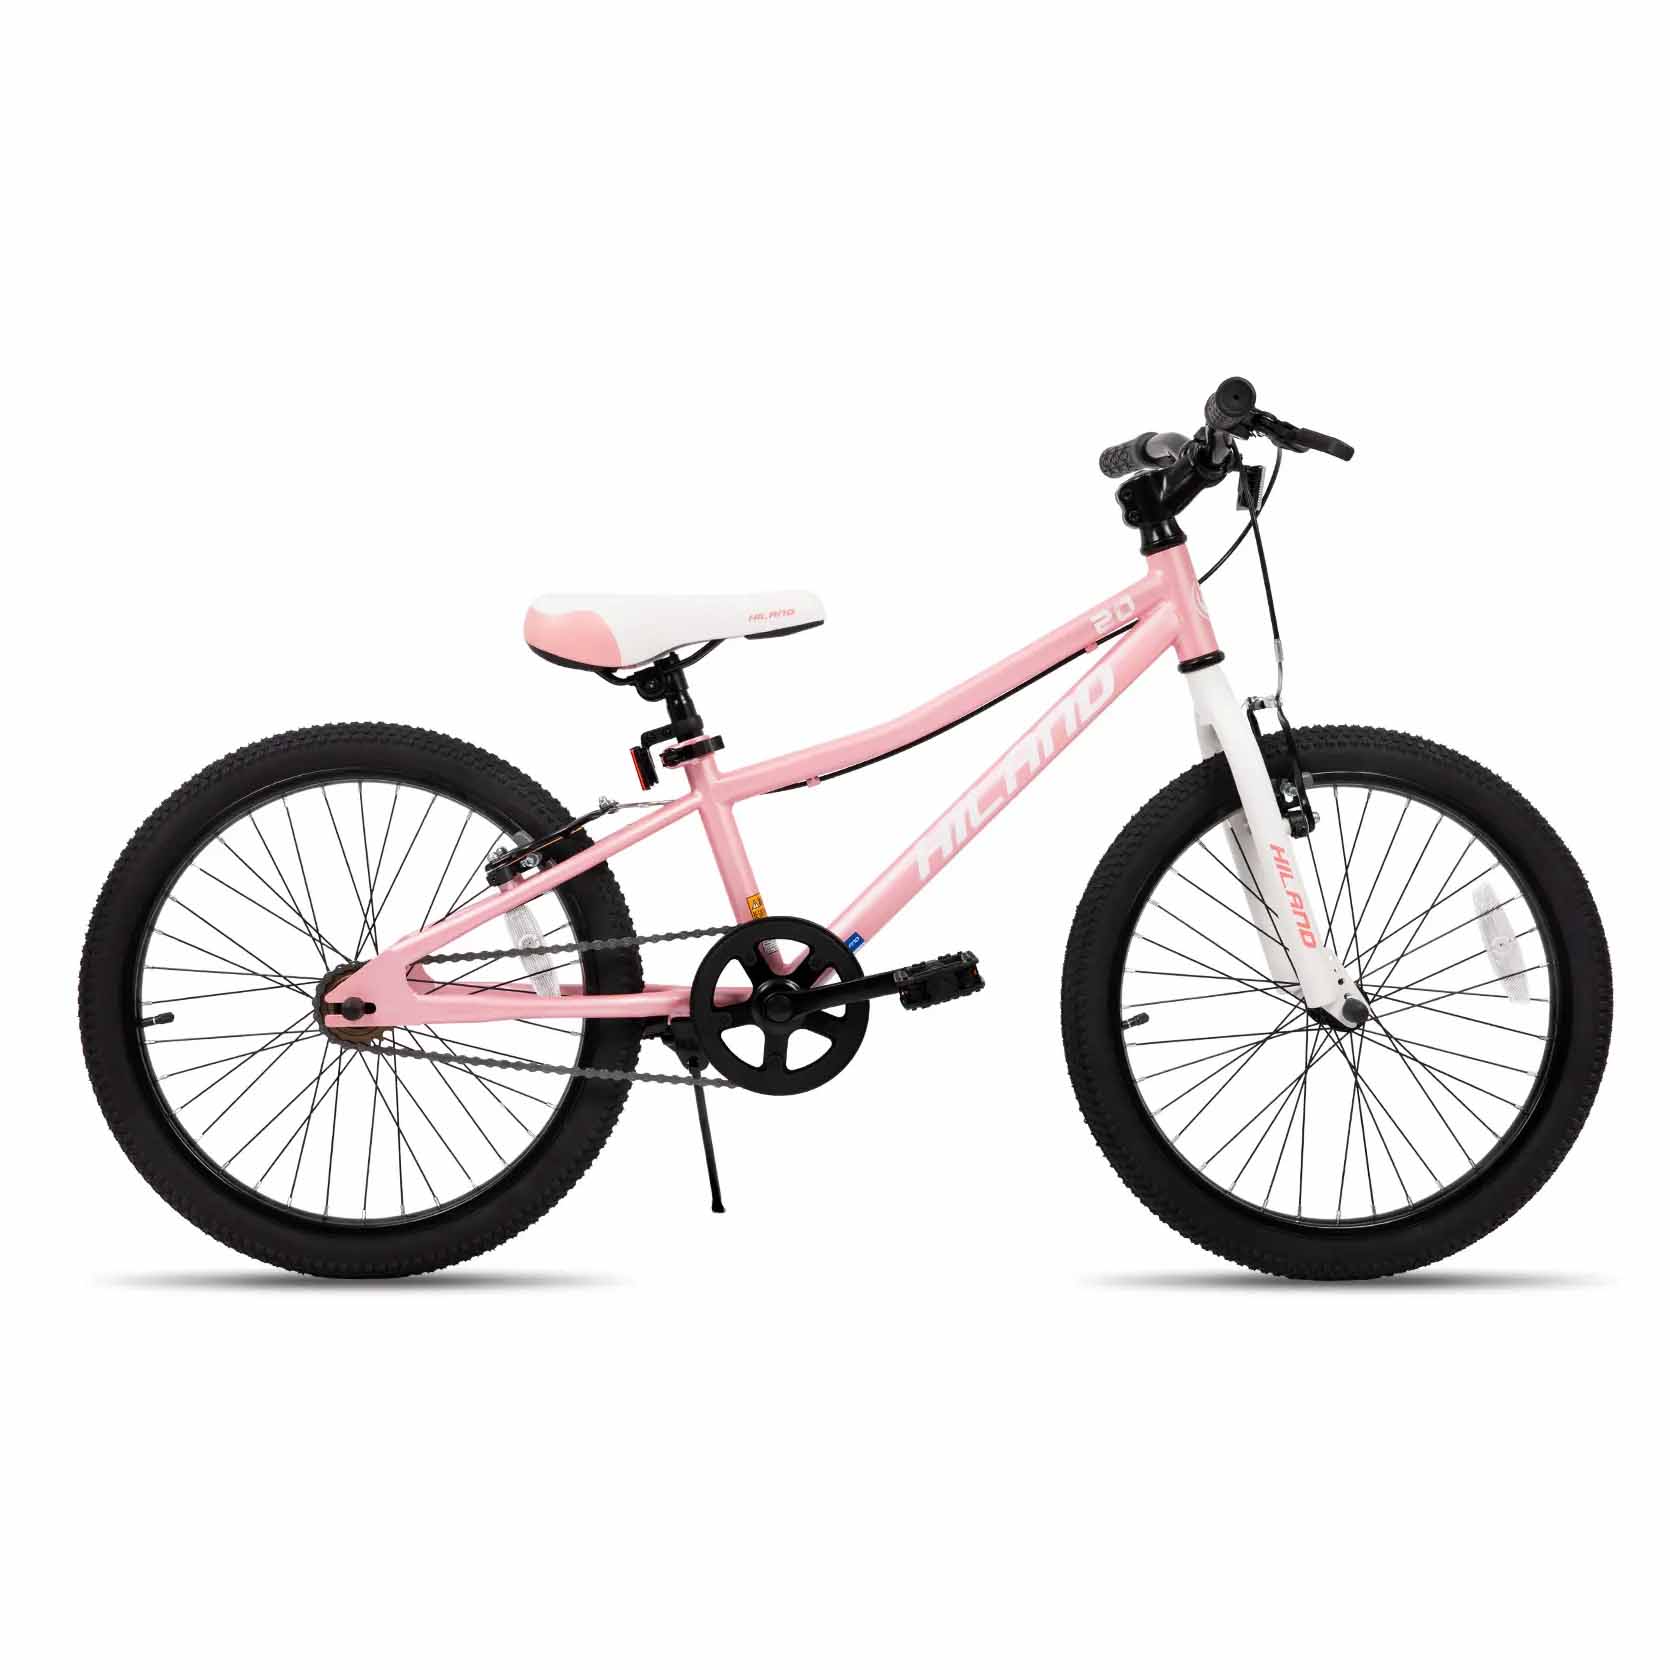 Climber 20'' Kids Mountain Bike in pink frame